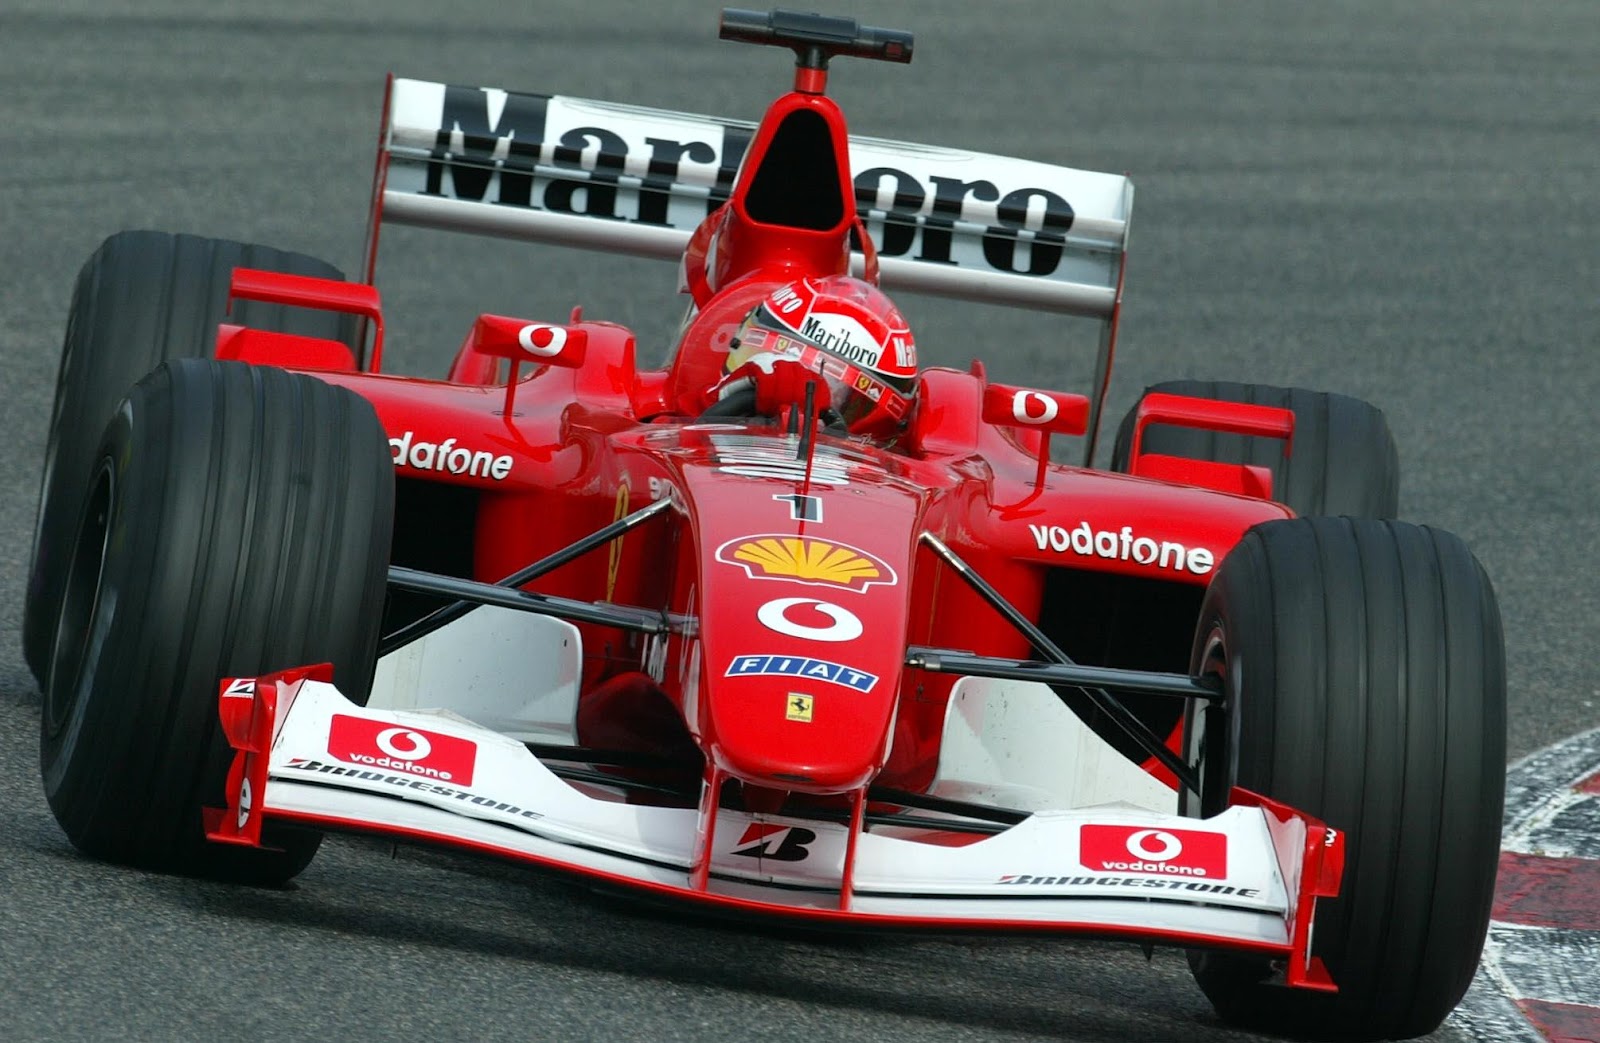 Michael Schumacher in his Ferrari at Spanish GP on 28 April 2002.